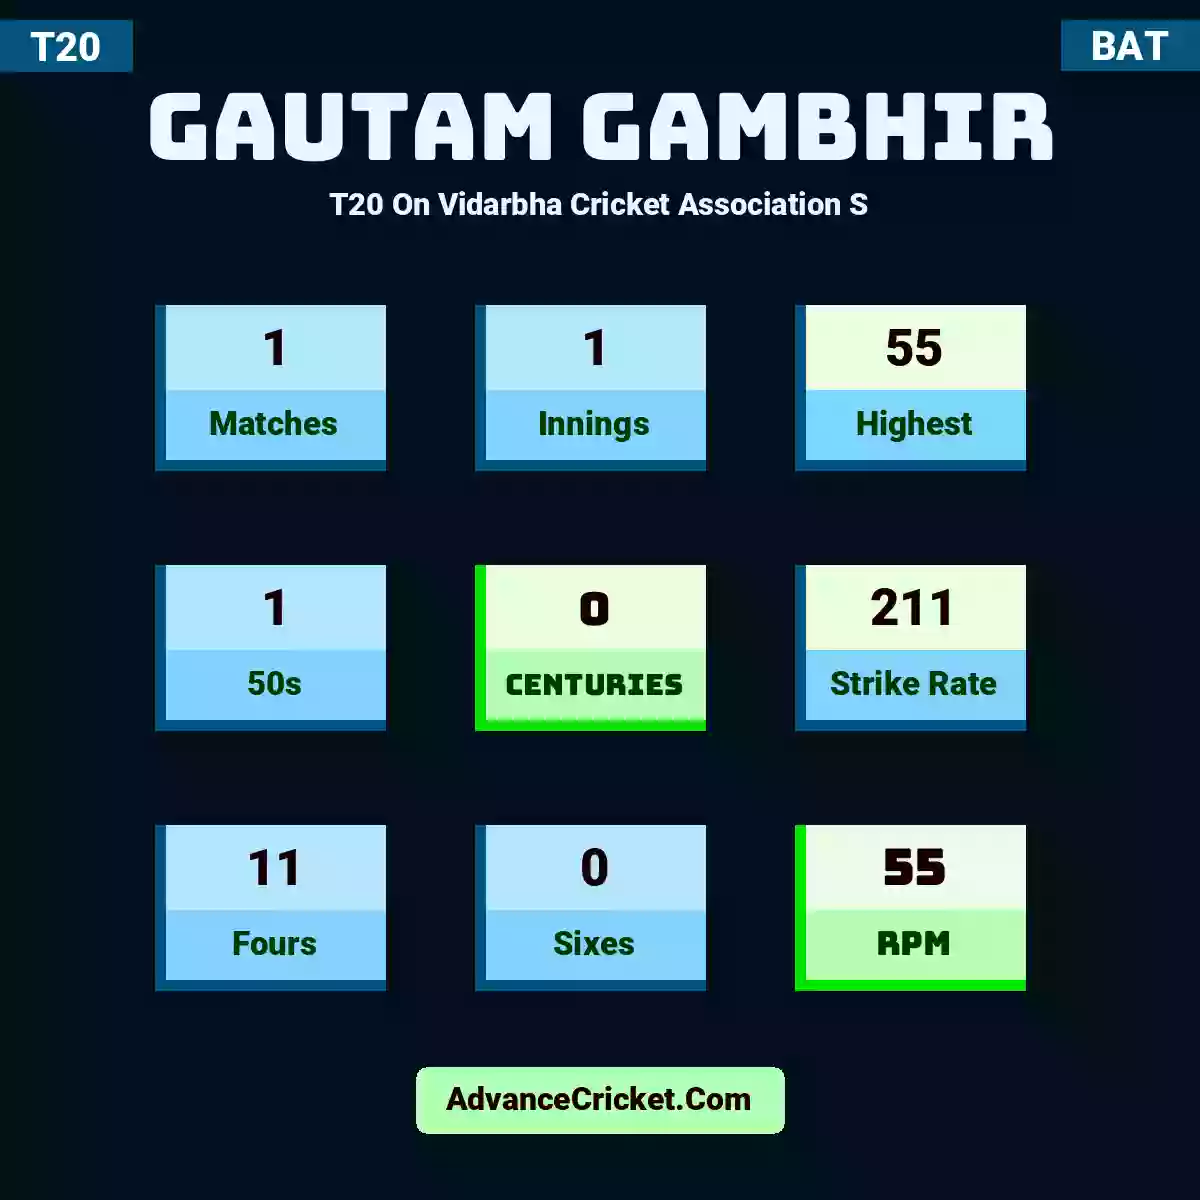 Gautam Gambhir T20  On Vidarbha Cricket Association S, Gautam Gambhir played 1 matches, scored 55 runs as highest, 1 half-centuries, and 0 centuries, with a strike rate of 211. G.Gambhir hit 11 fours and 0 sixes, with an RPM of 55.